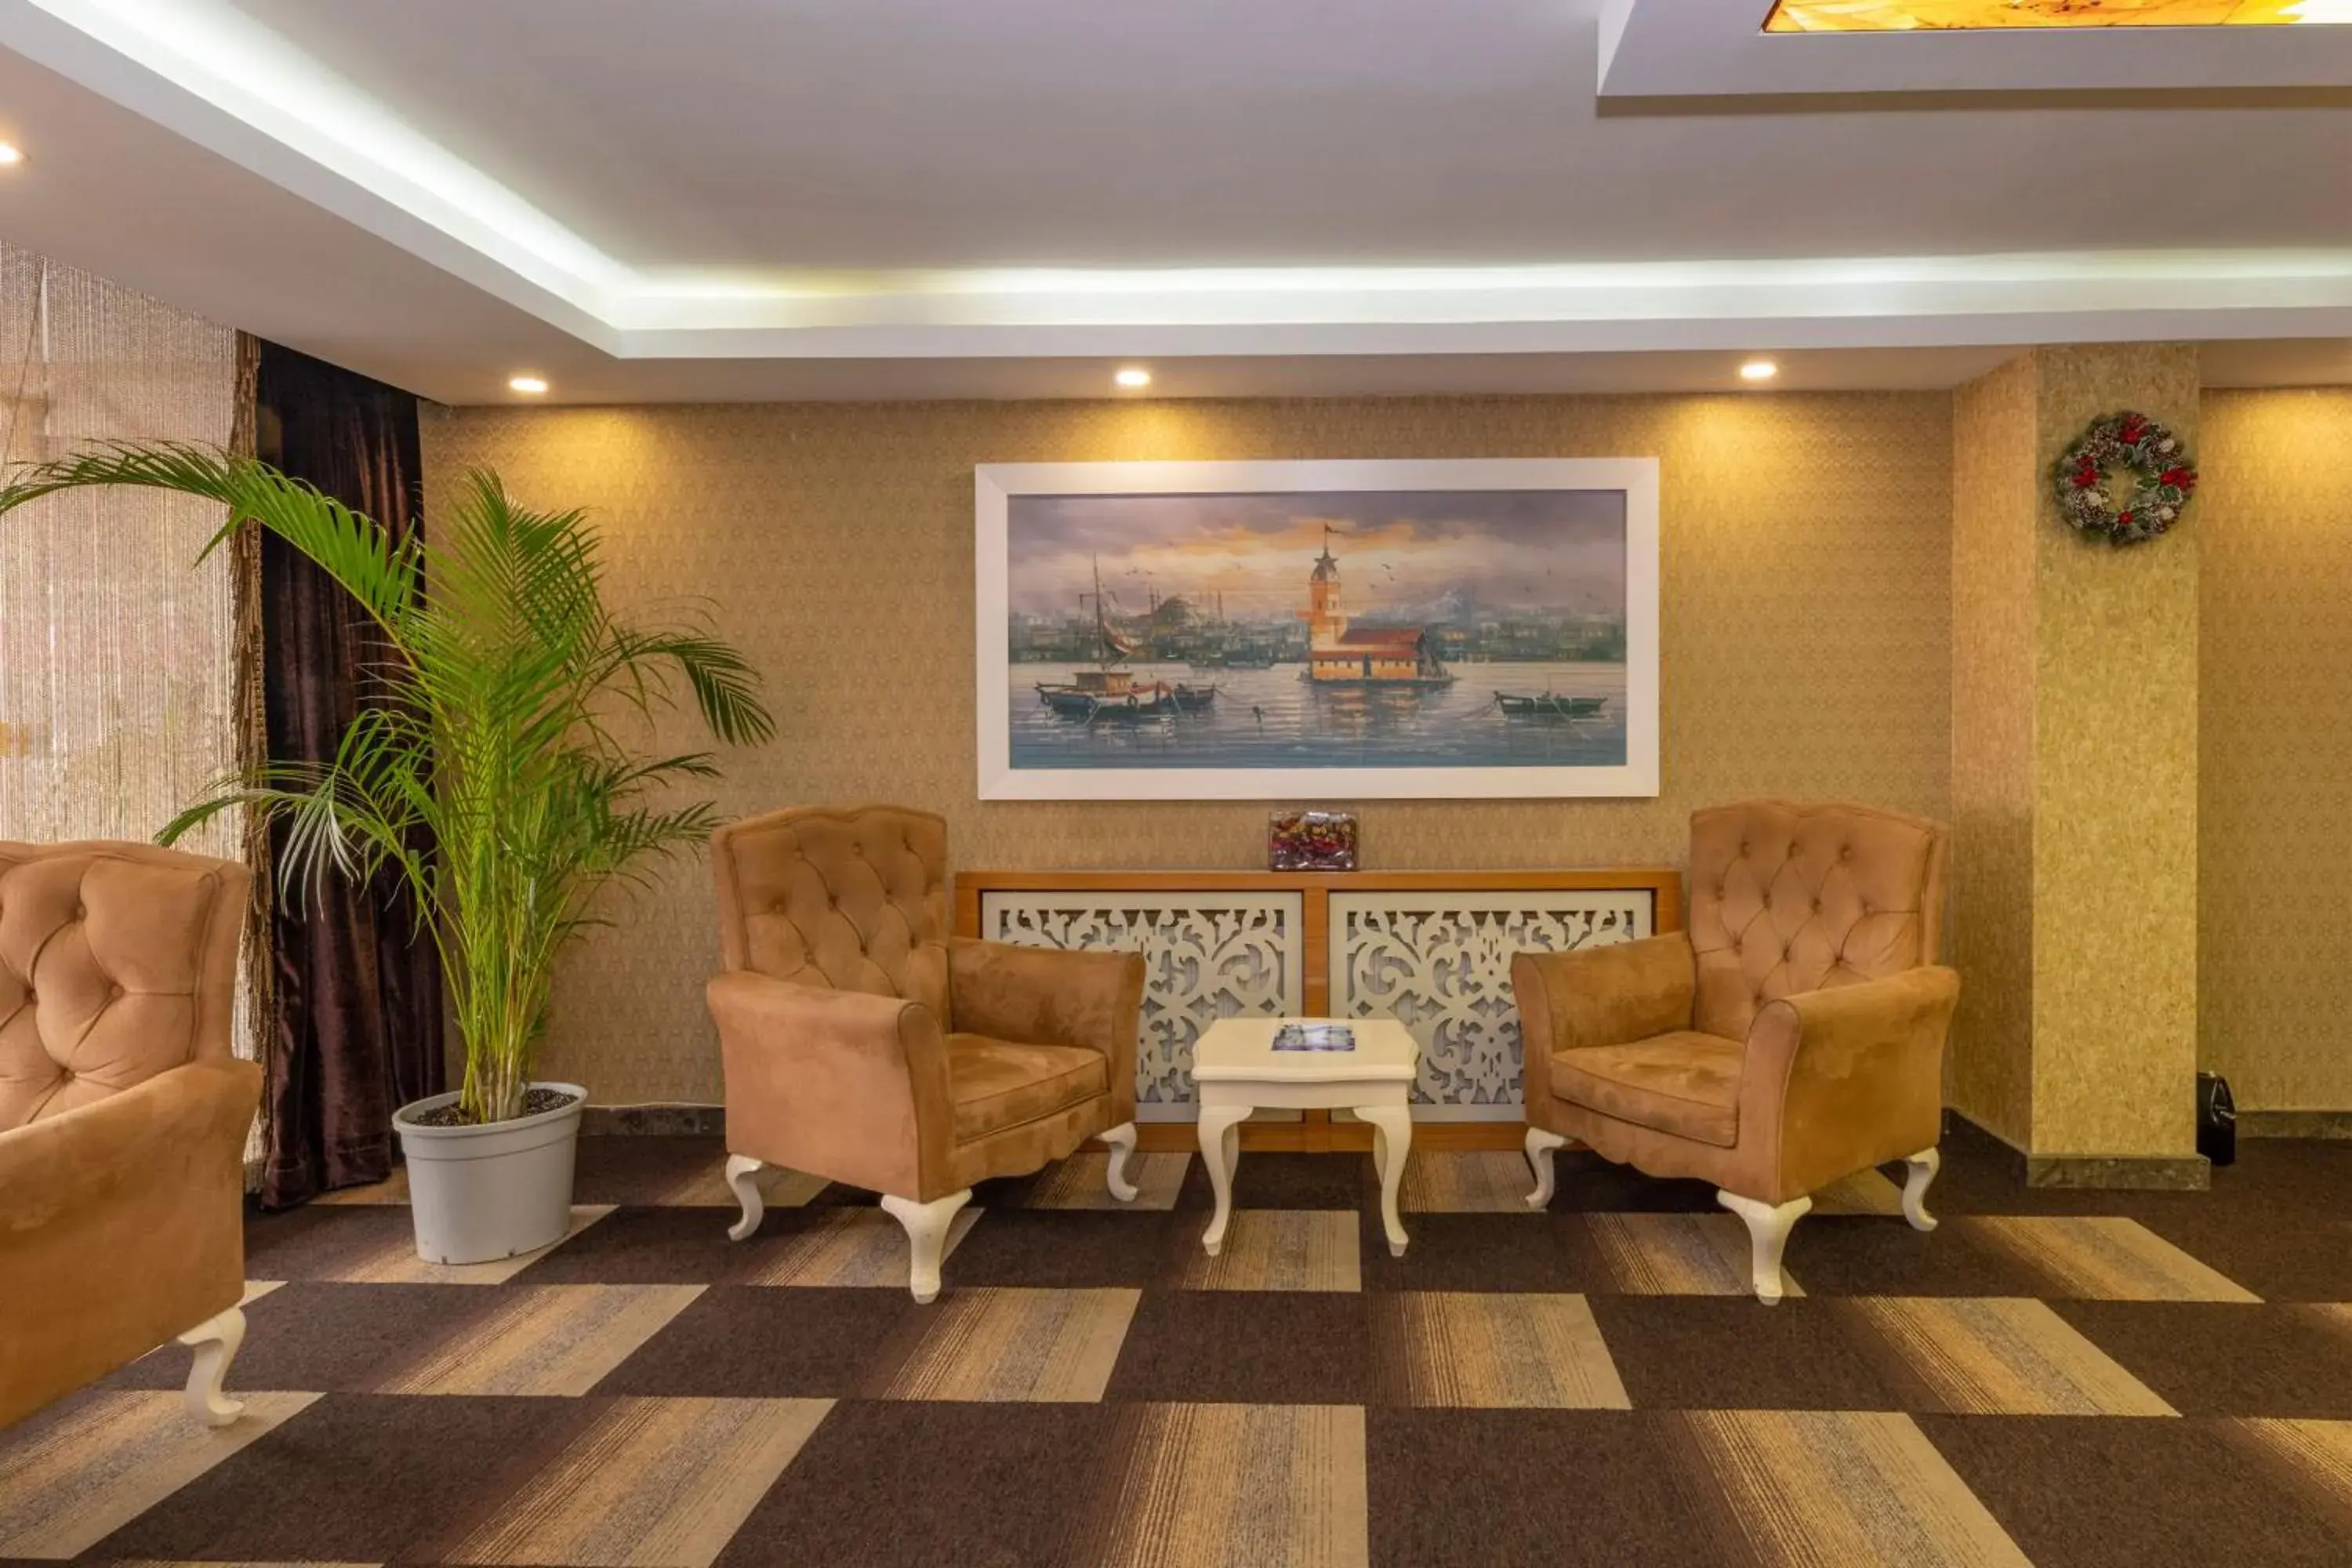 Lobby or reception in Regno Hotel